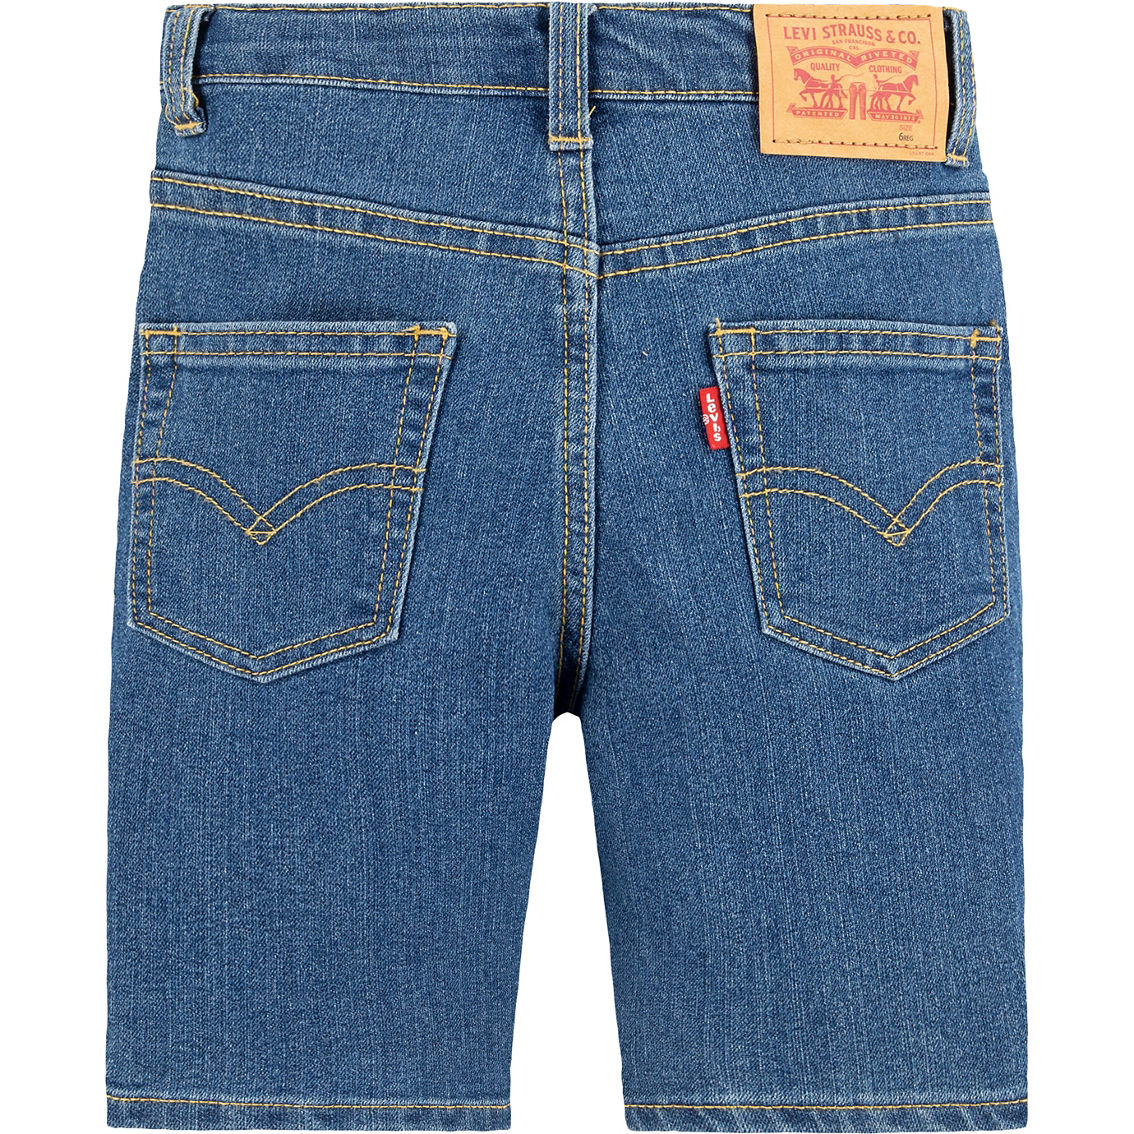 Levi's Little Boys Slim Fit Classic Shorts - Image 2 of 5